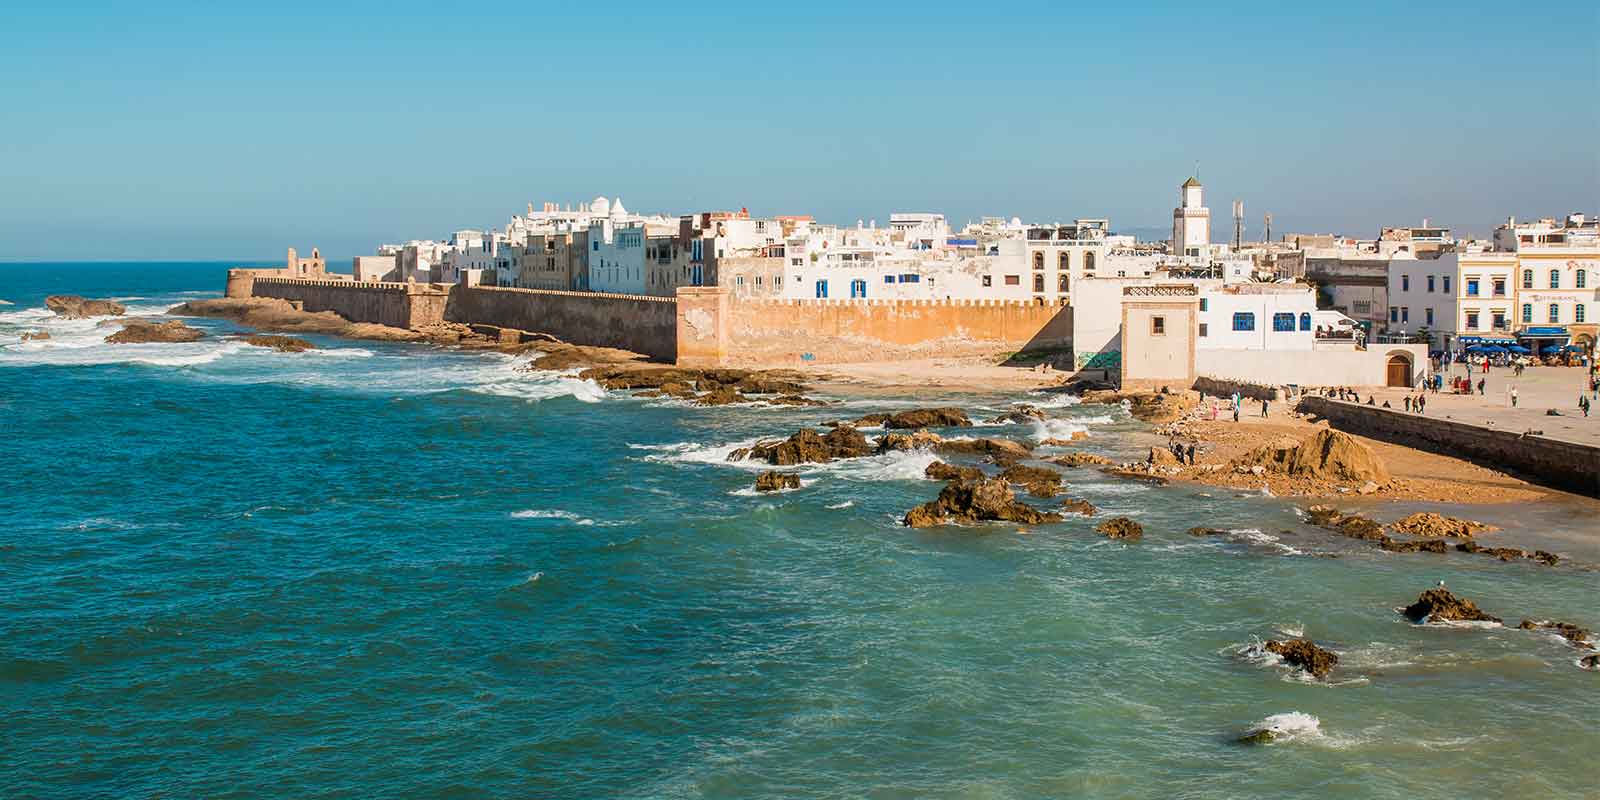 Rocky coastline and ancient city walls of Essaouira